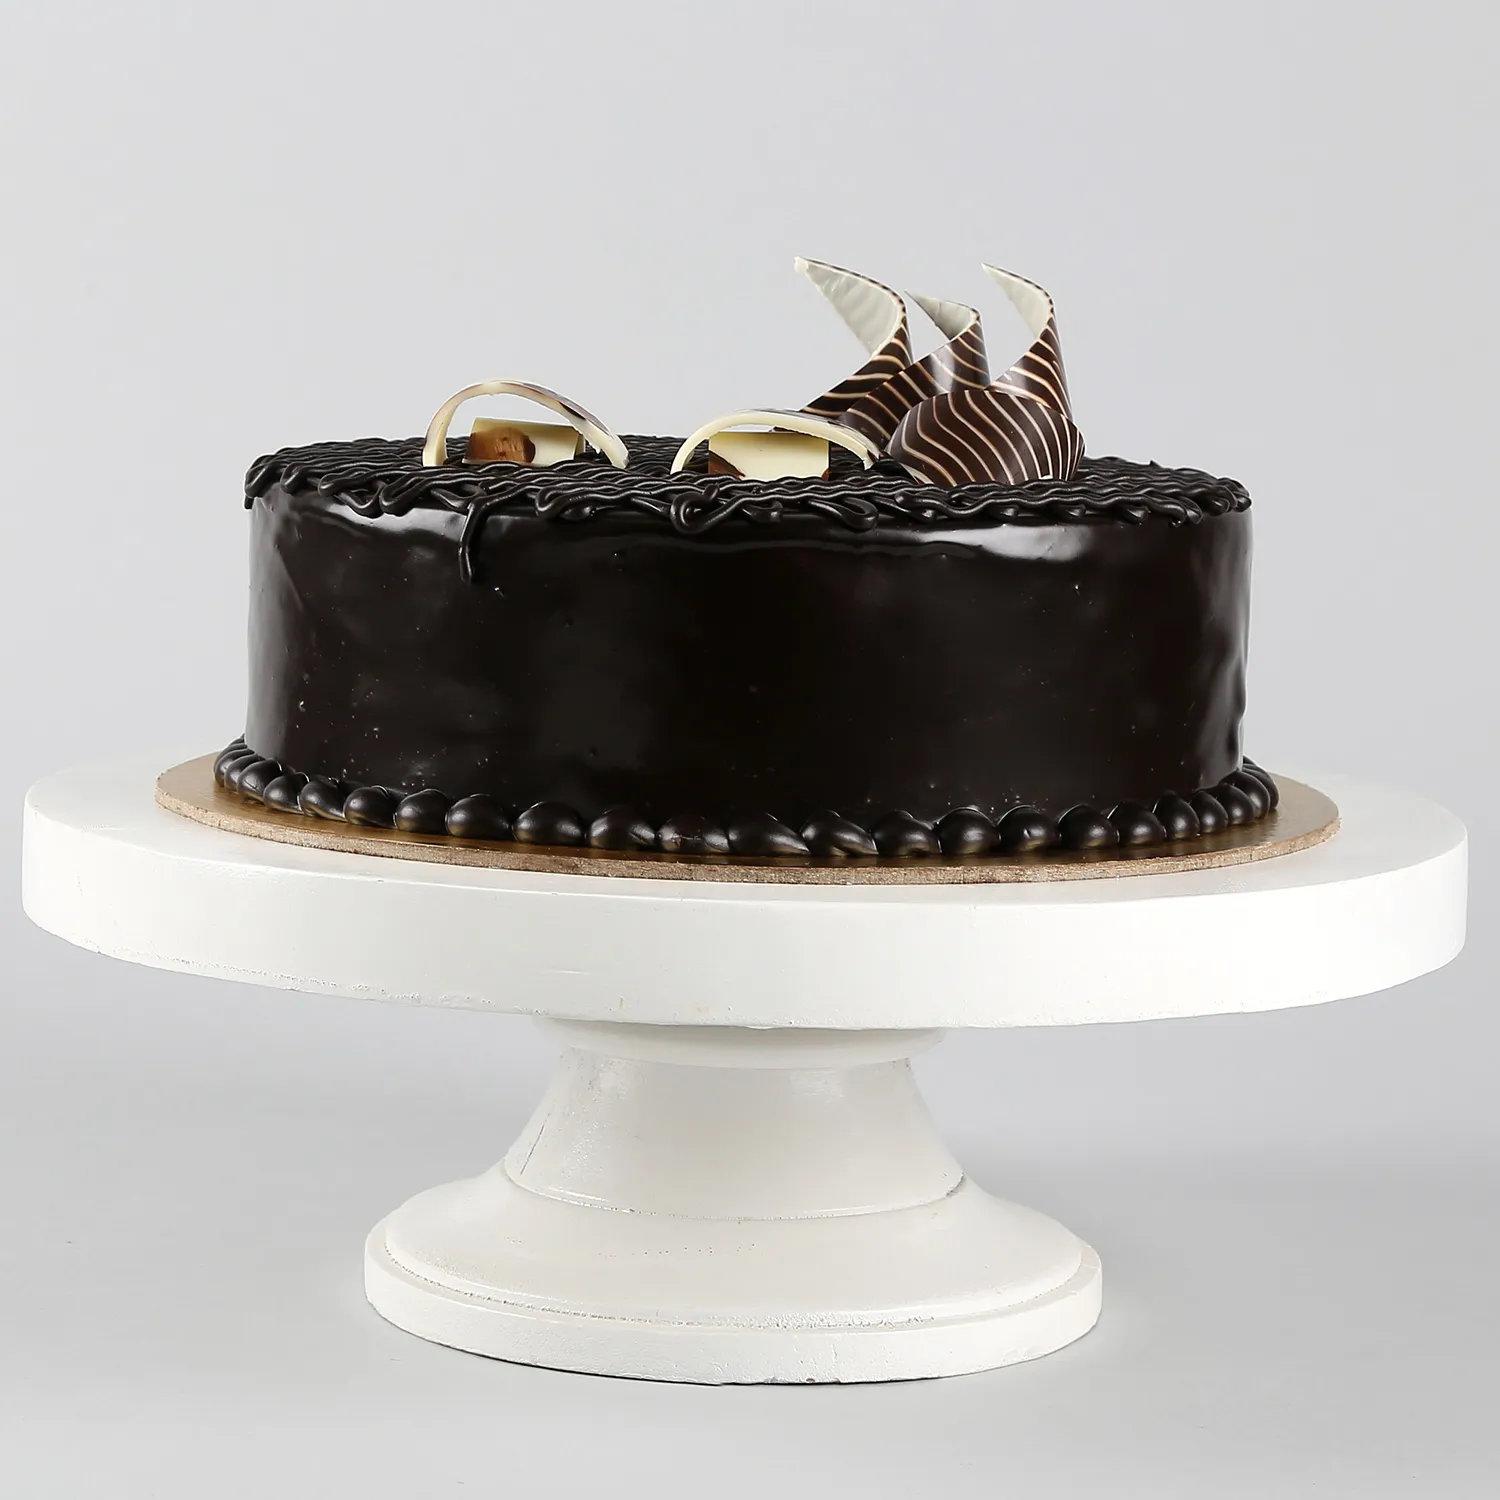 Rich Chocolate Splash Cake - 1 KG